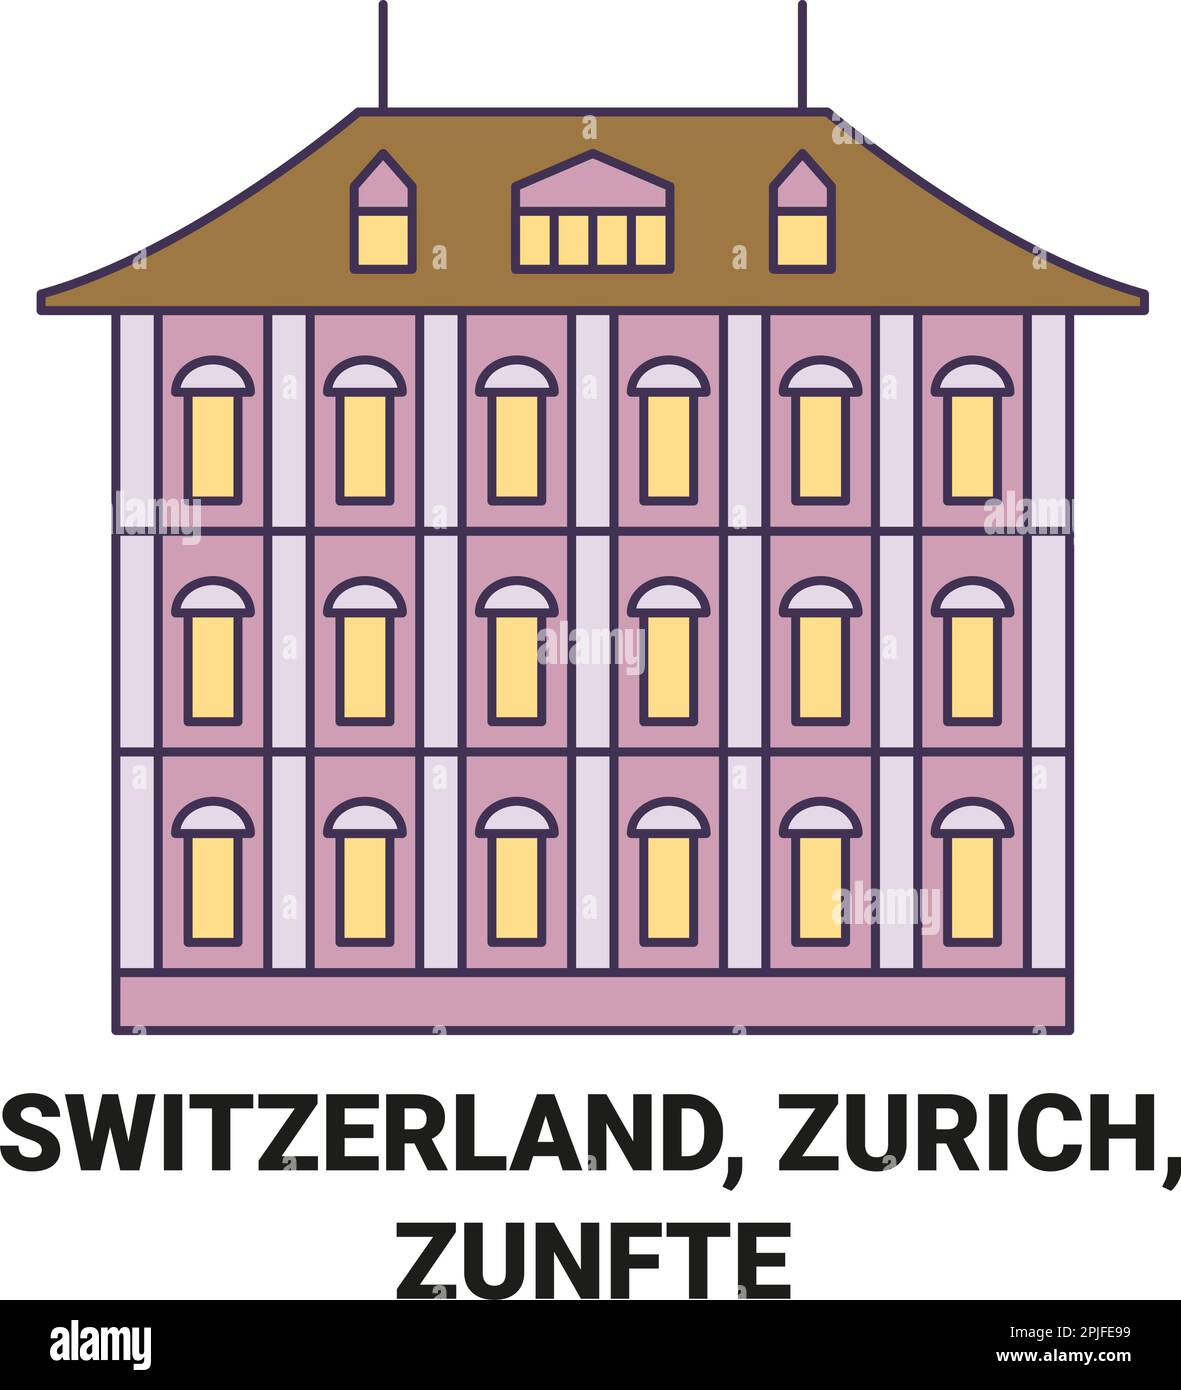 Suisse, Zurich, Zunfte illustration du vecteur de repère de voyage Illustration de Vecteur